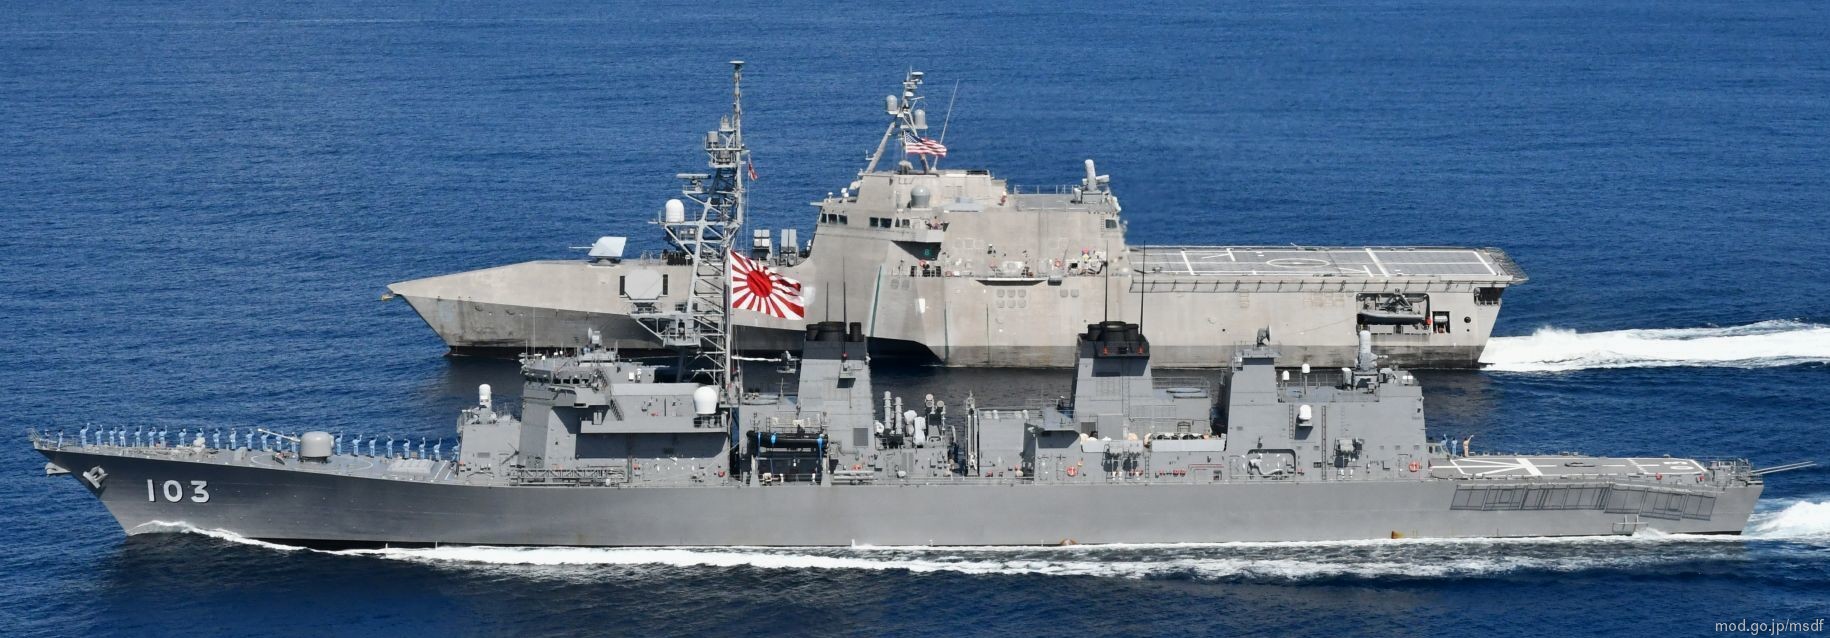 dd-103 js yudachi murasame class destroyer japan maritime self defense force jmsdf 09